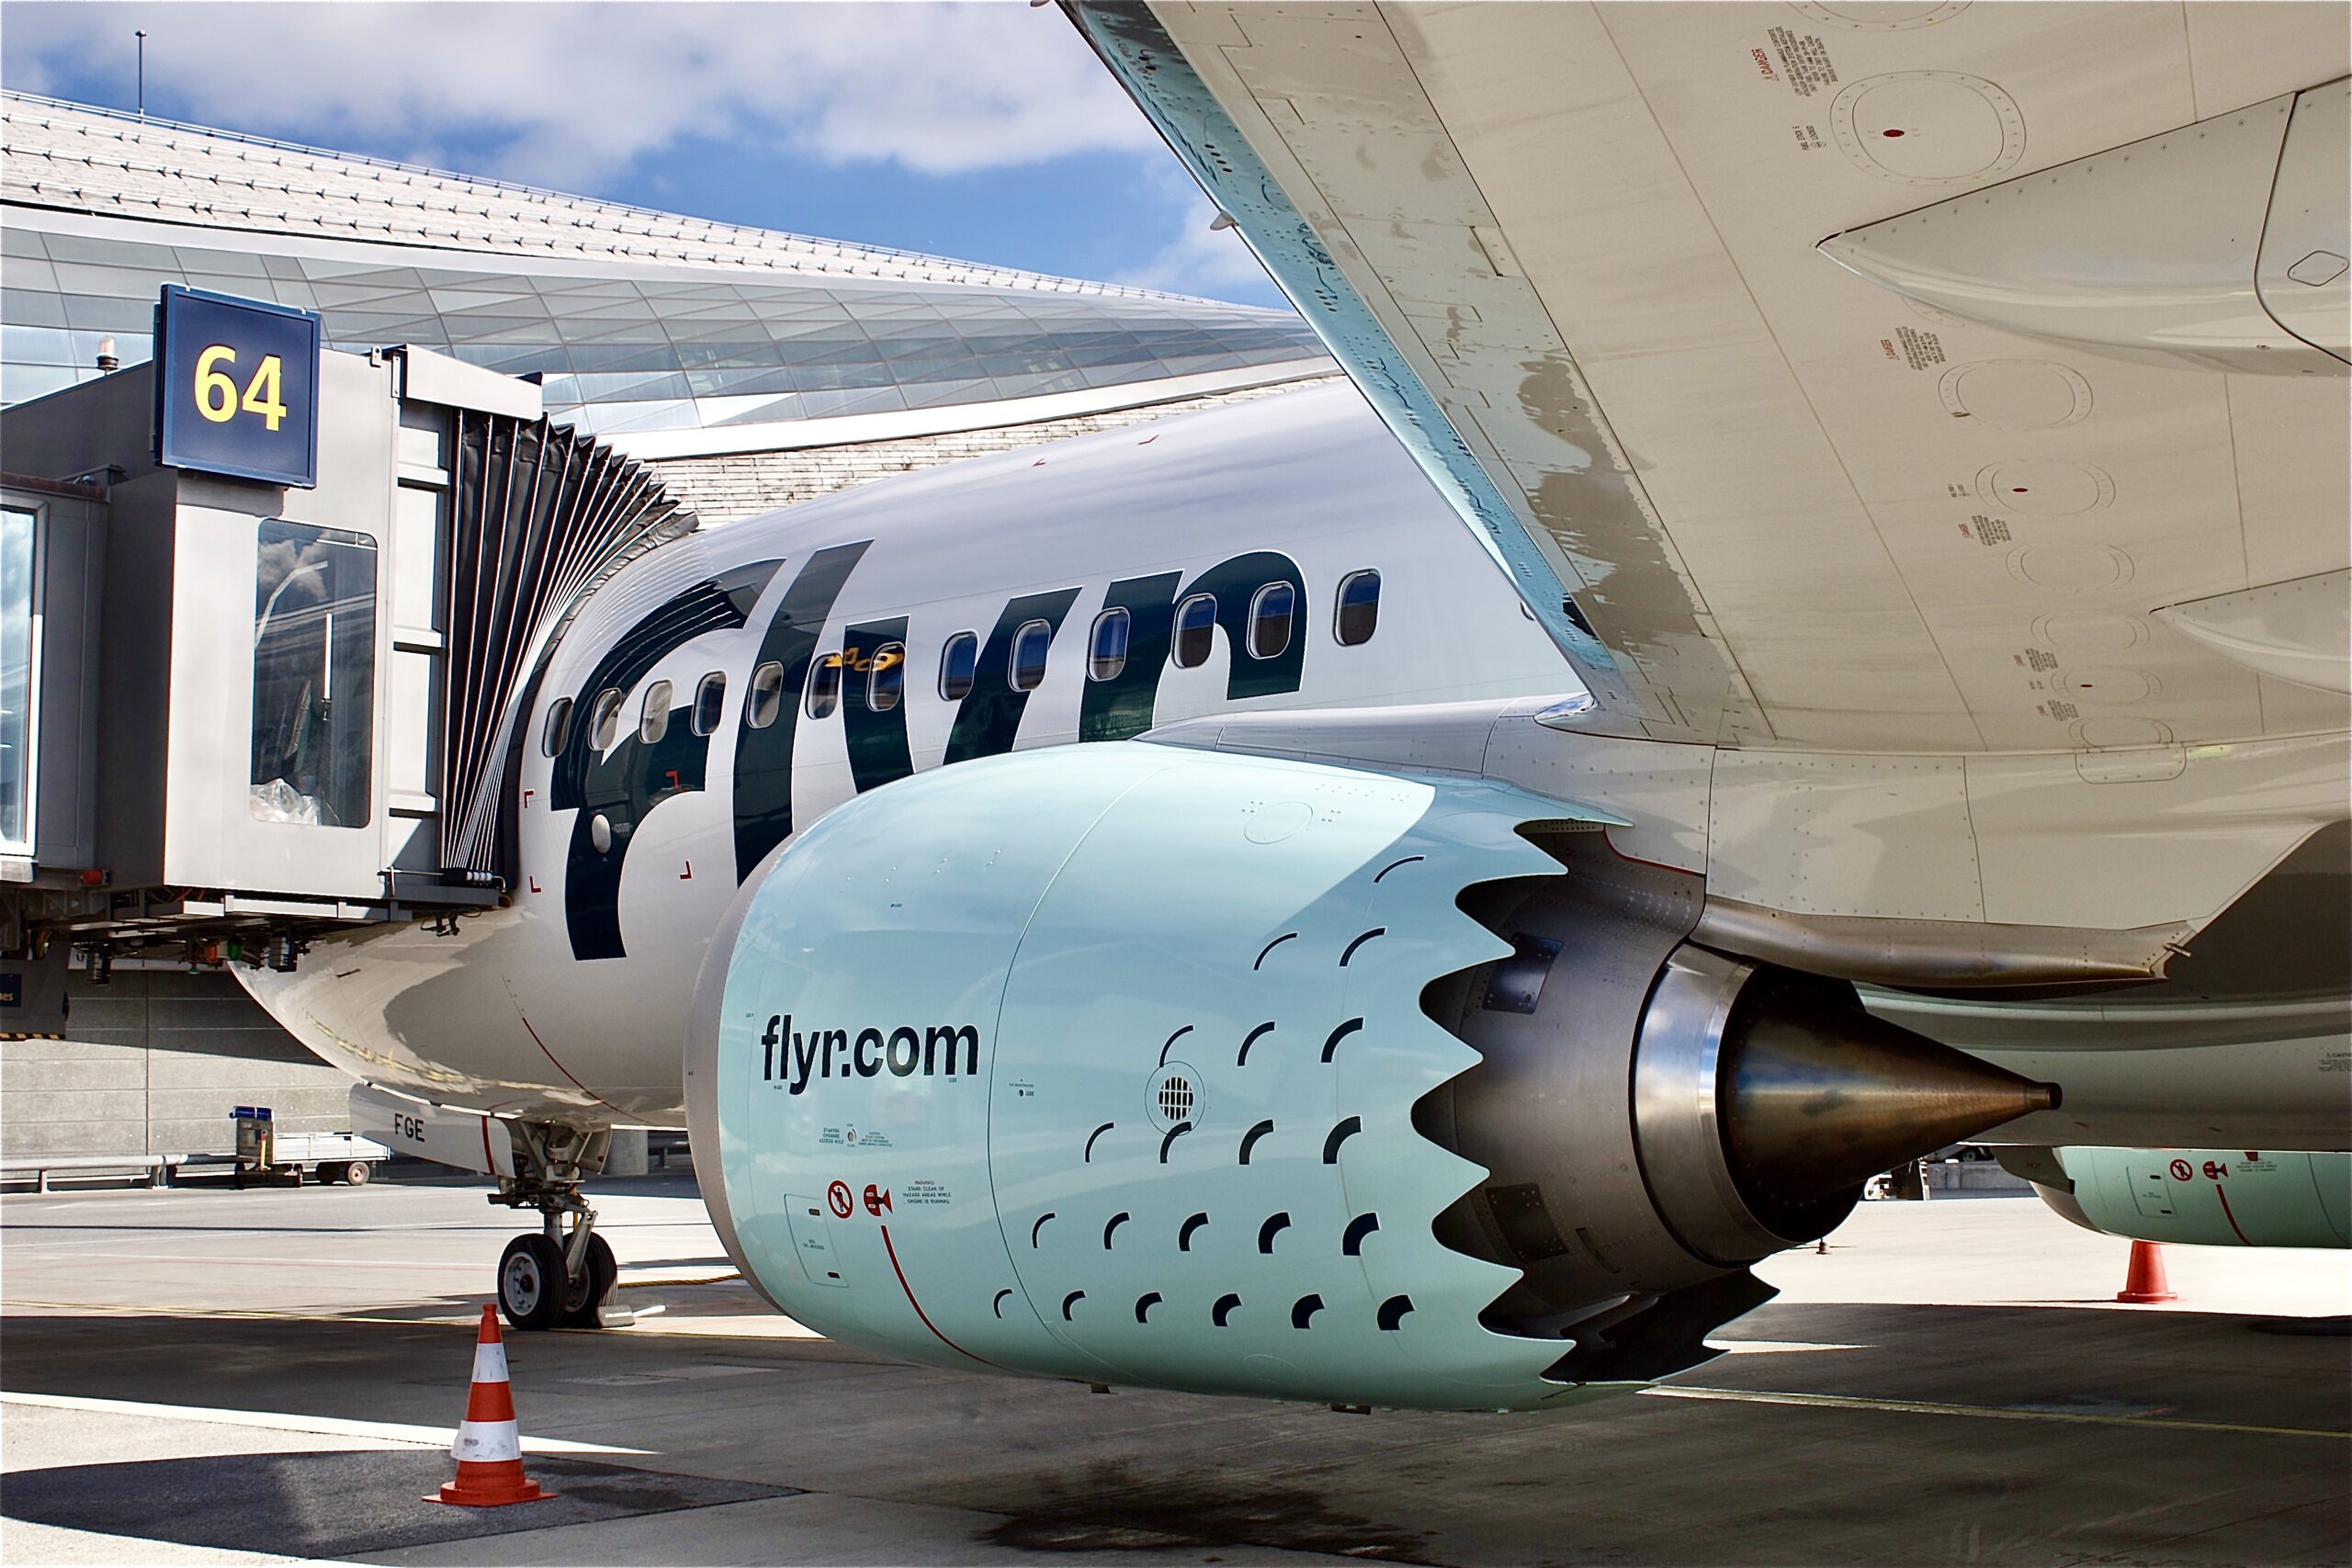 Close-up of a Flyr aircraft at the terminal.